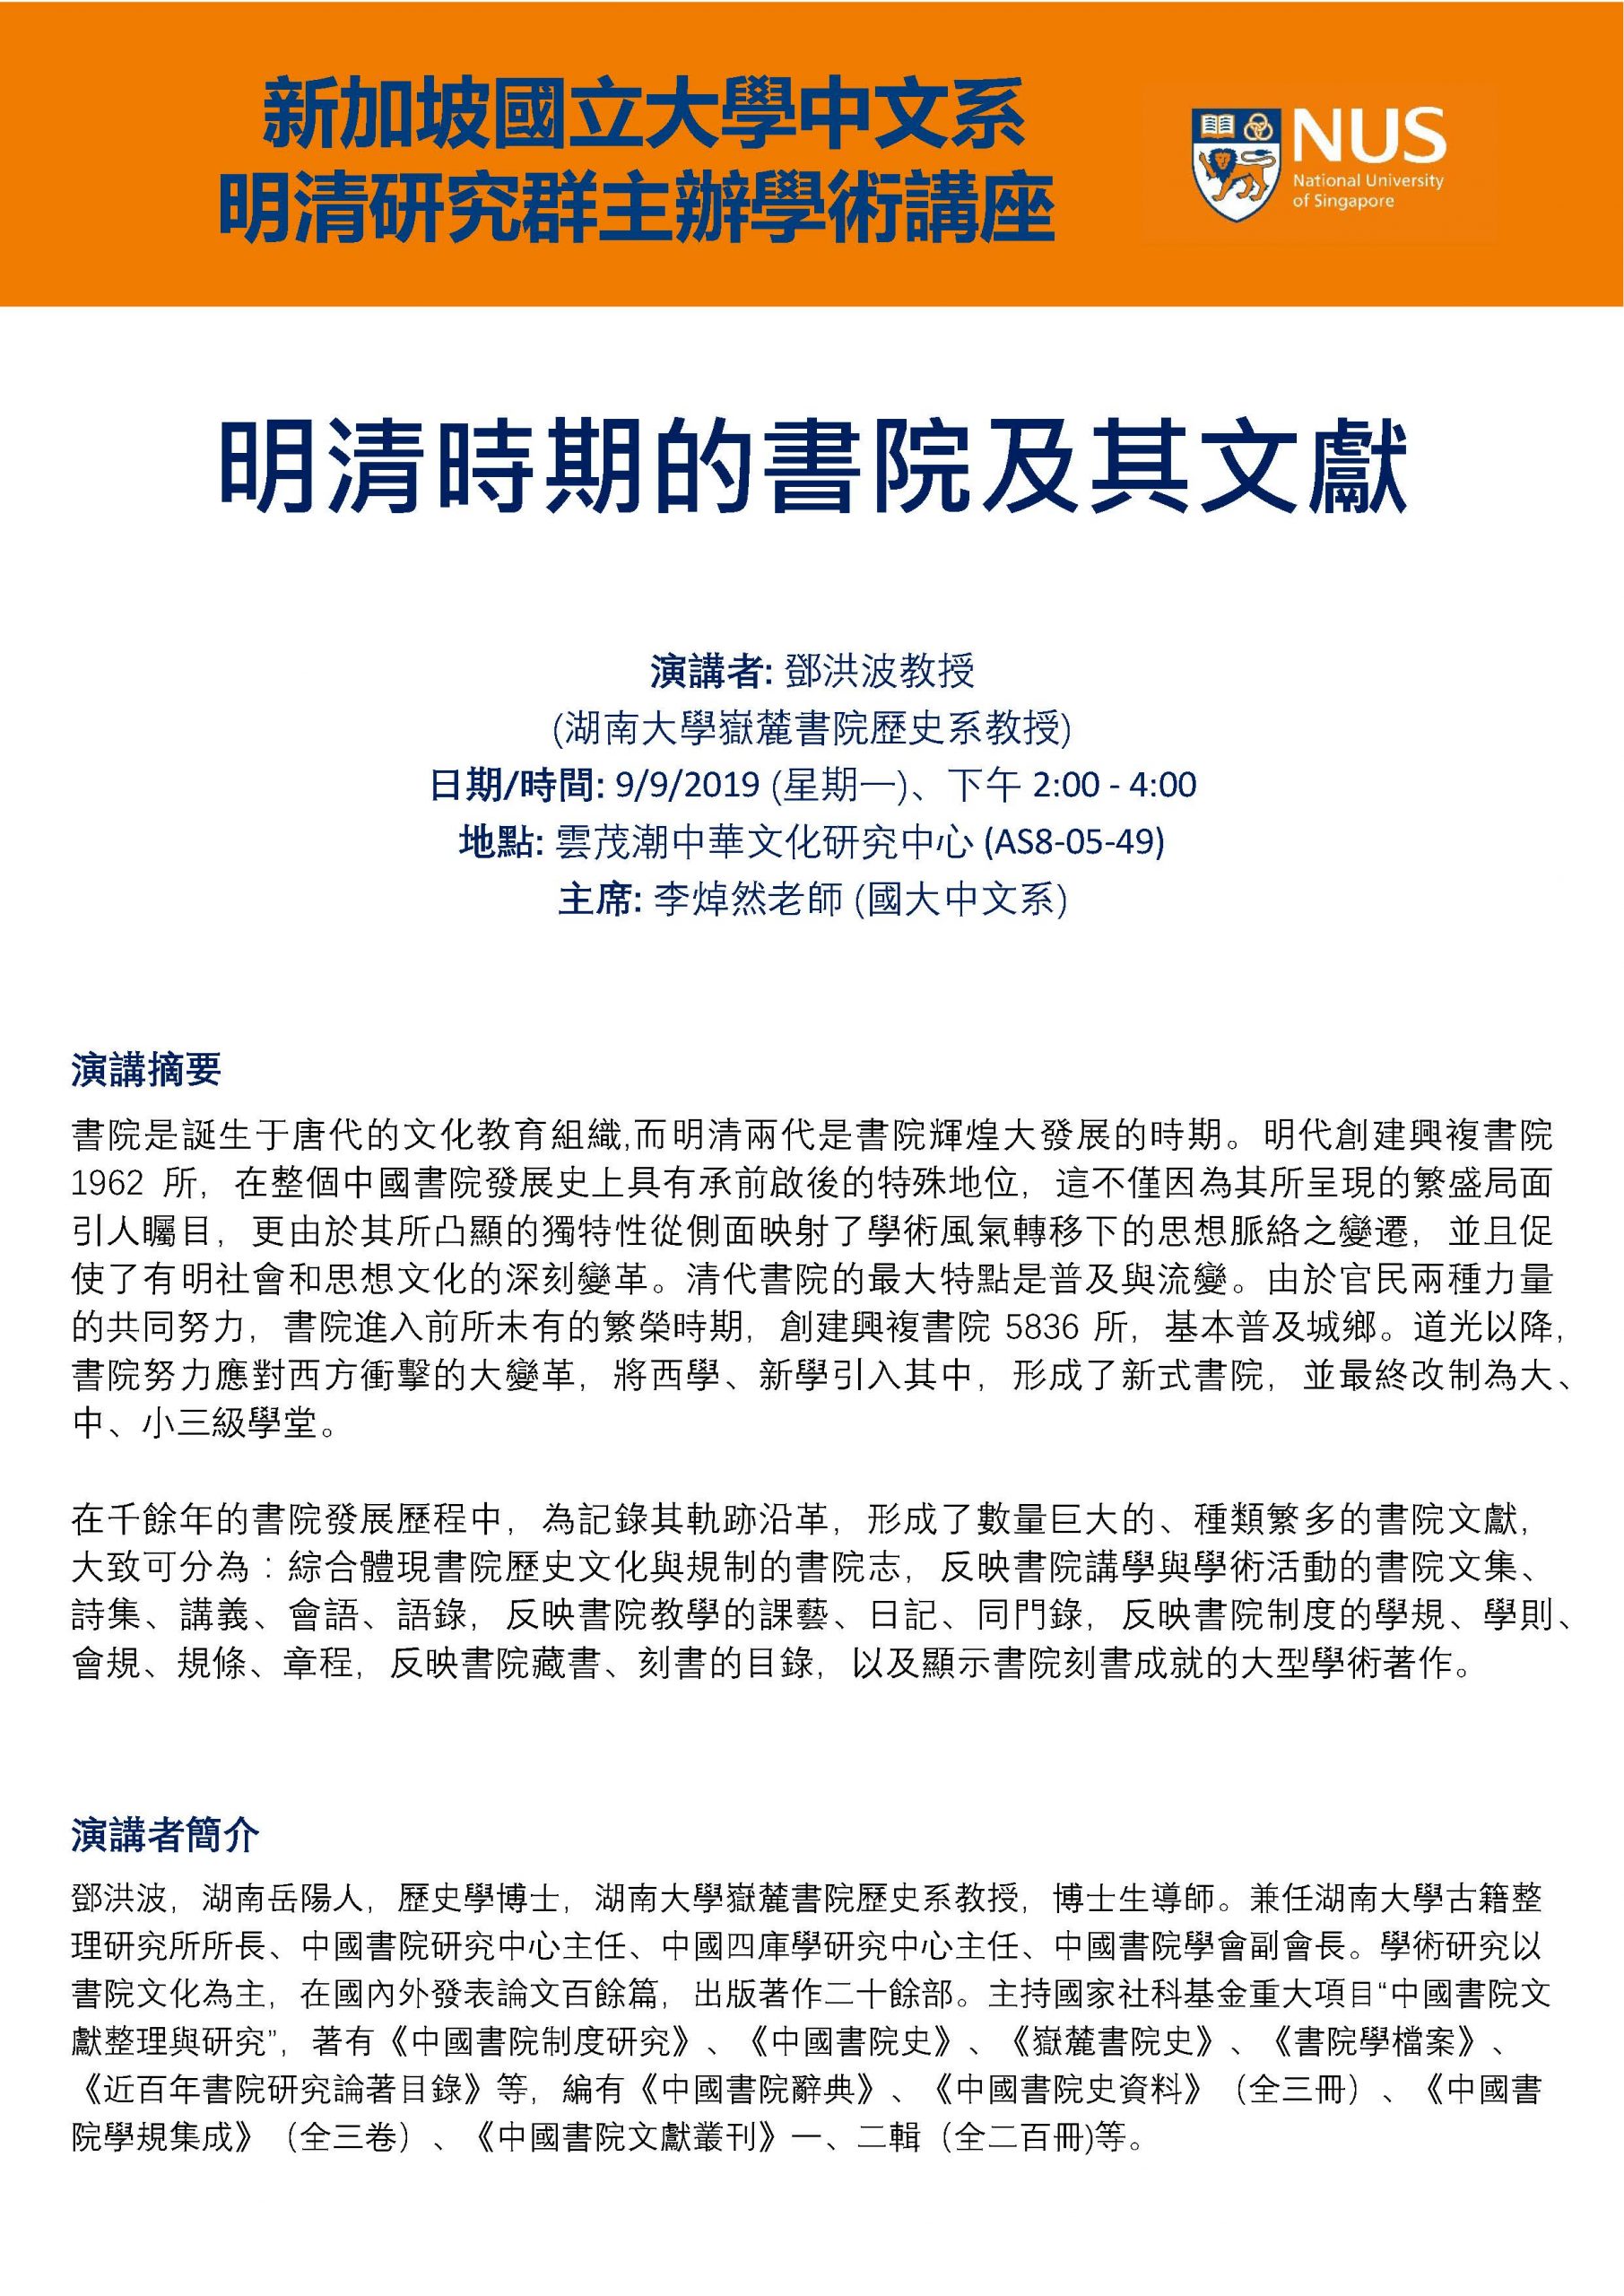 Deng Hongbo Seminar 9 September